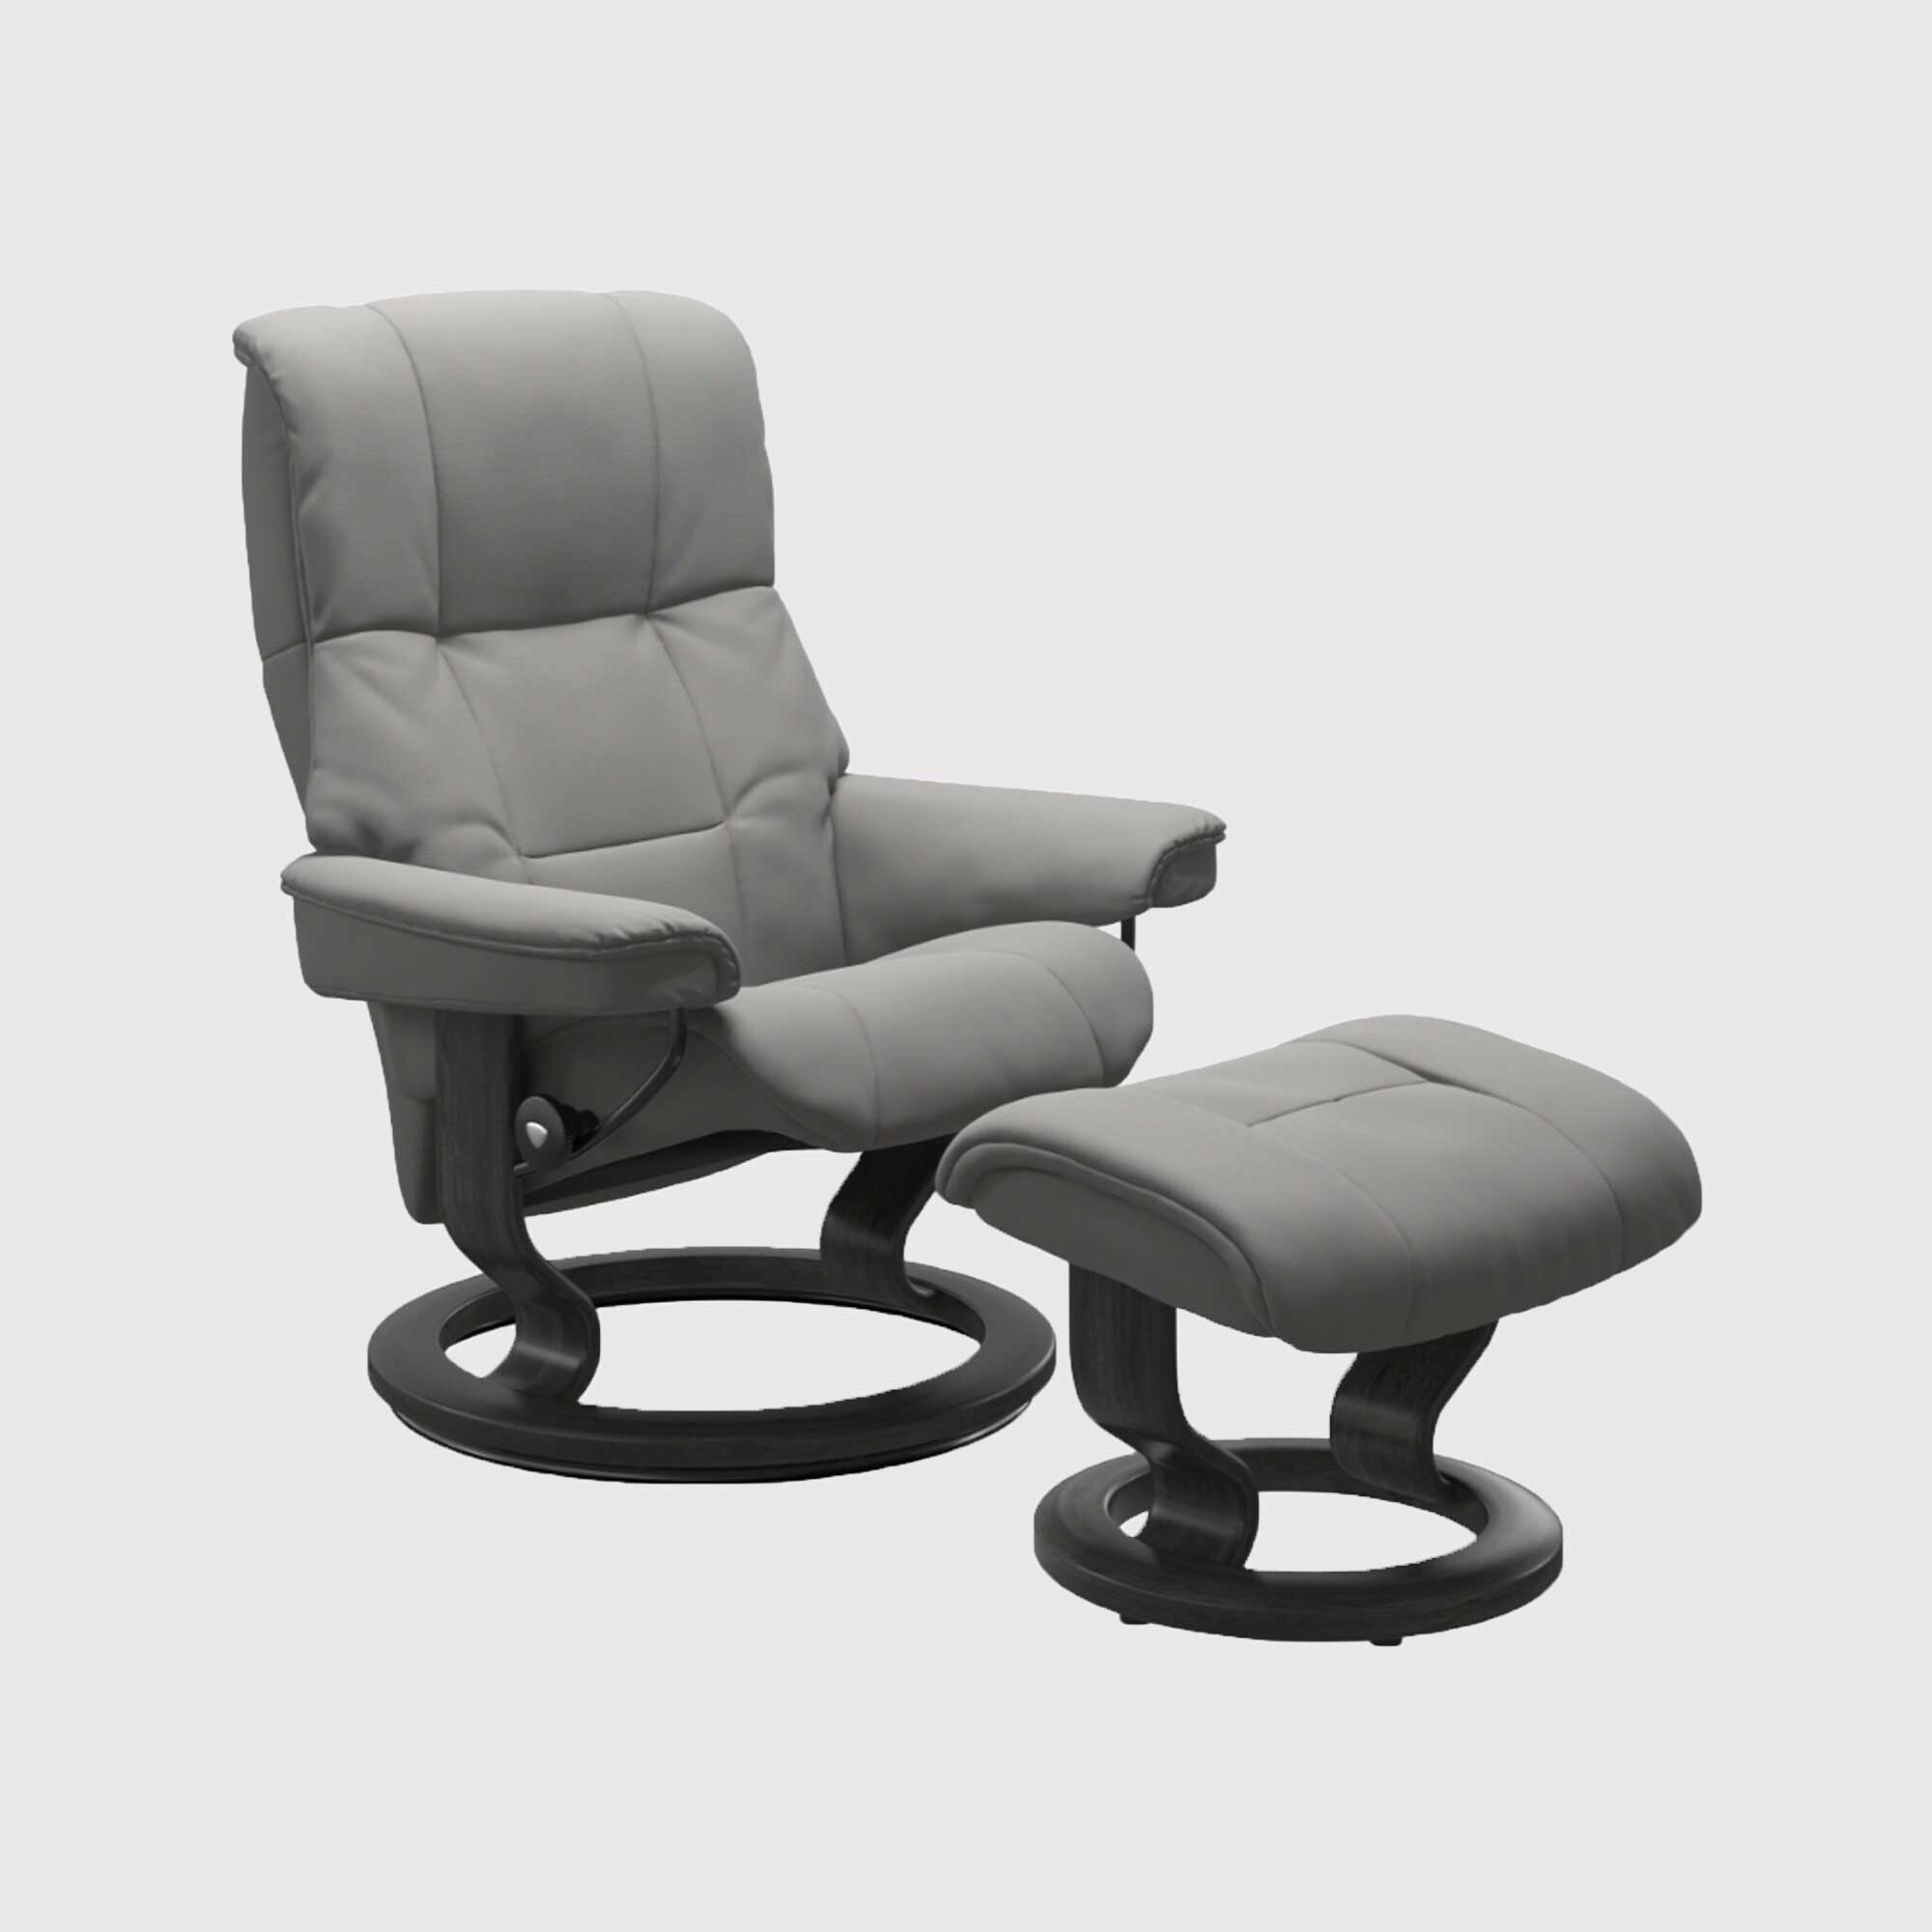 Stressless Mayfair Medium Recliner Chair & Stool, Grey Leather | Barker & Stonehouse